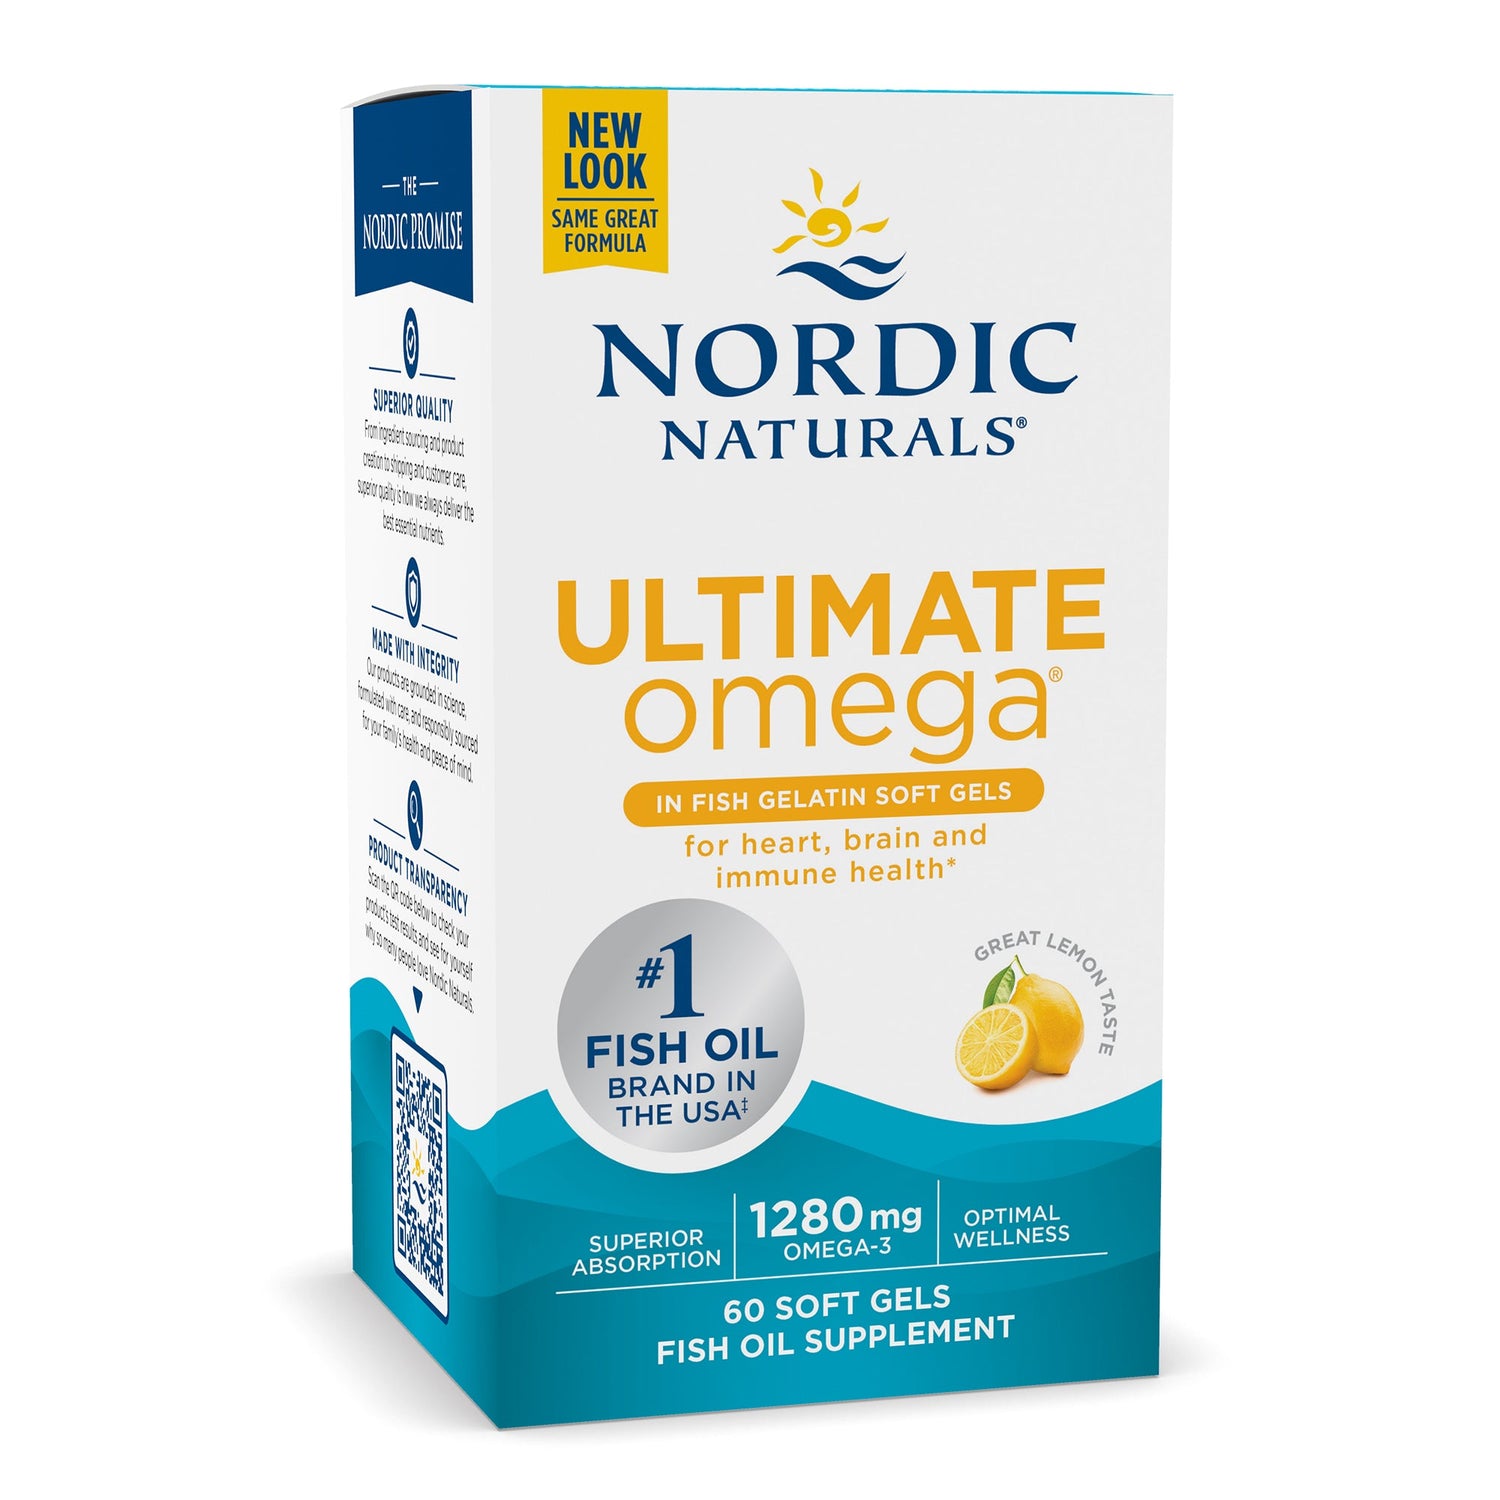 Nordic Naturals Ultimate Omega in Fish Gelatin